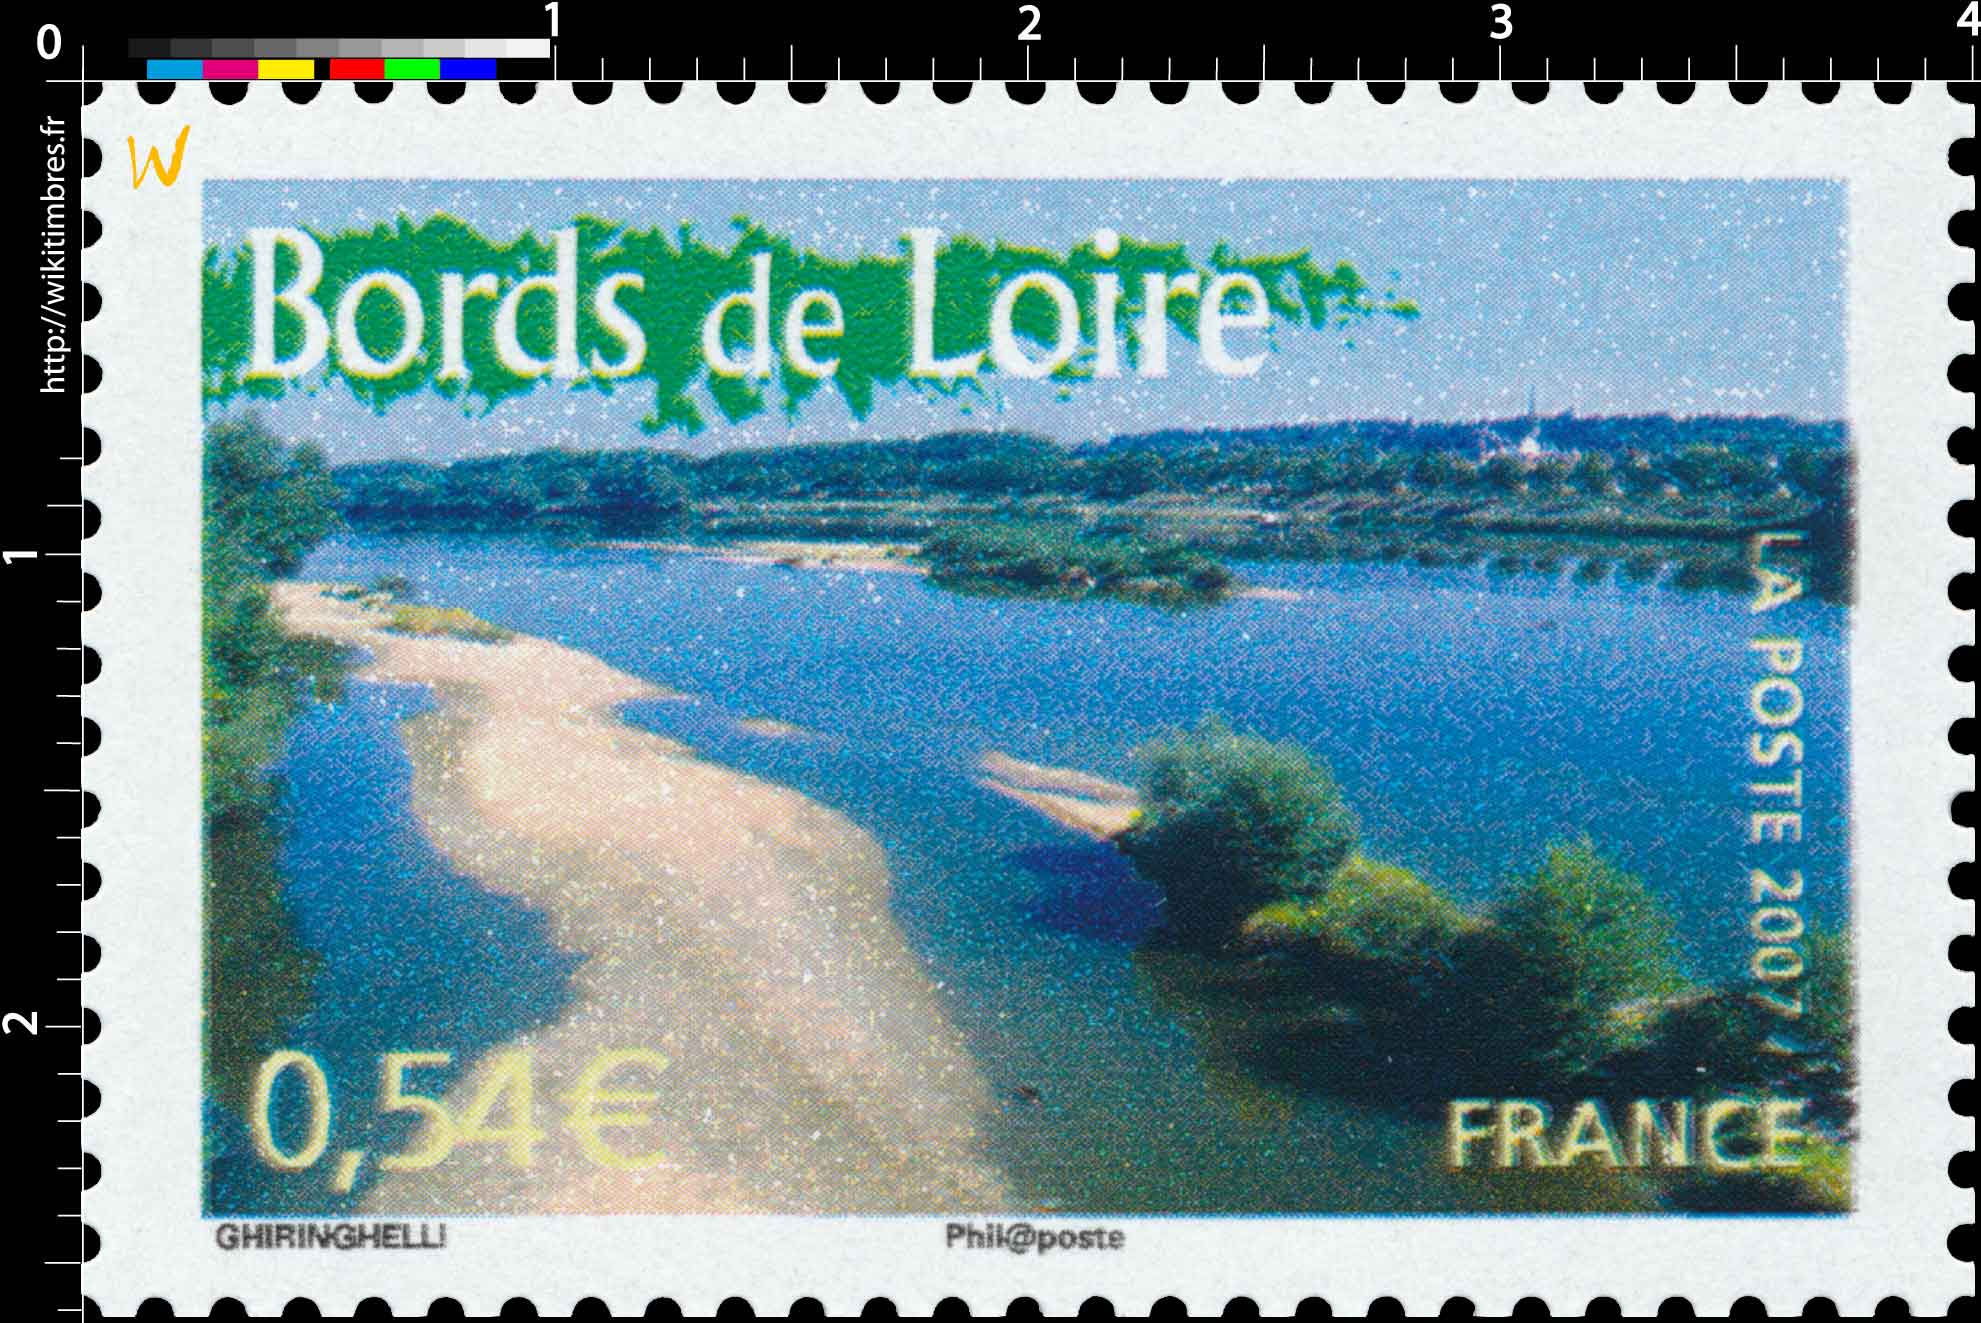 2007 Bords de Loire